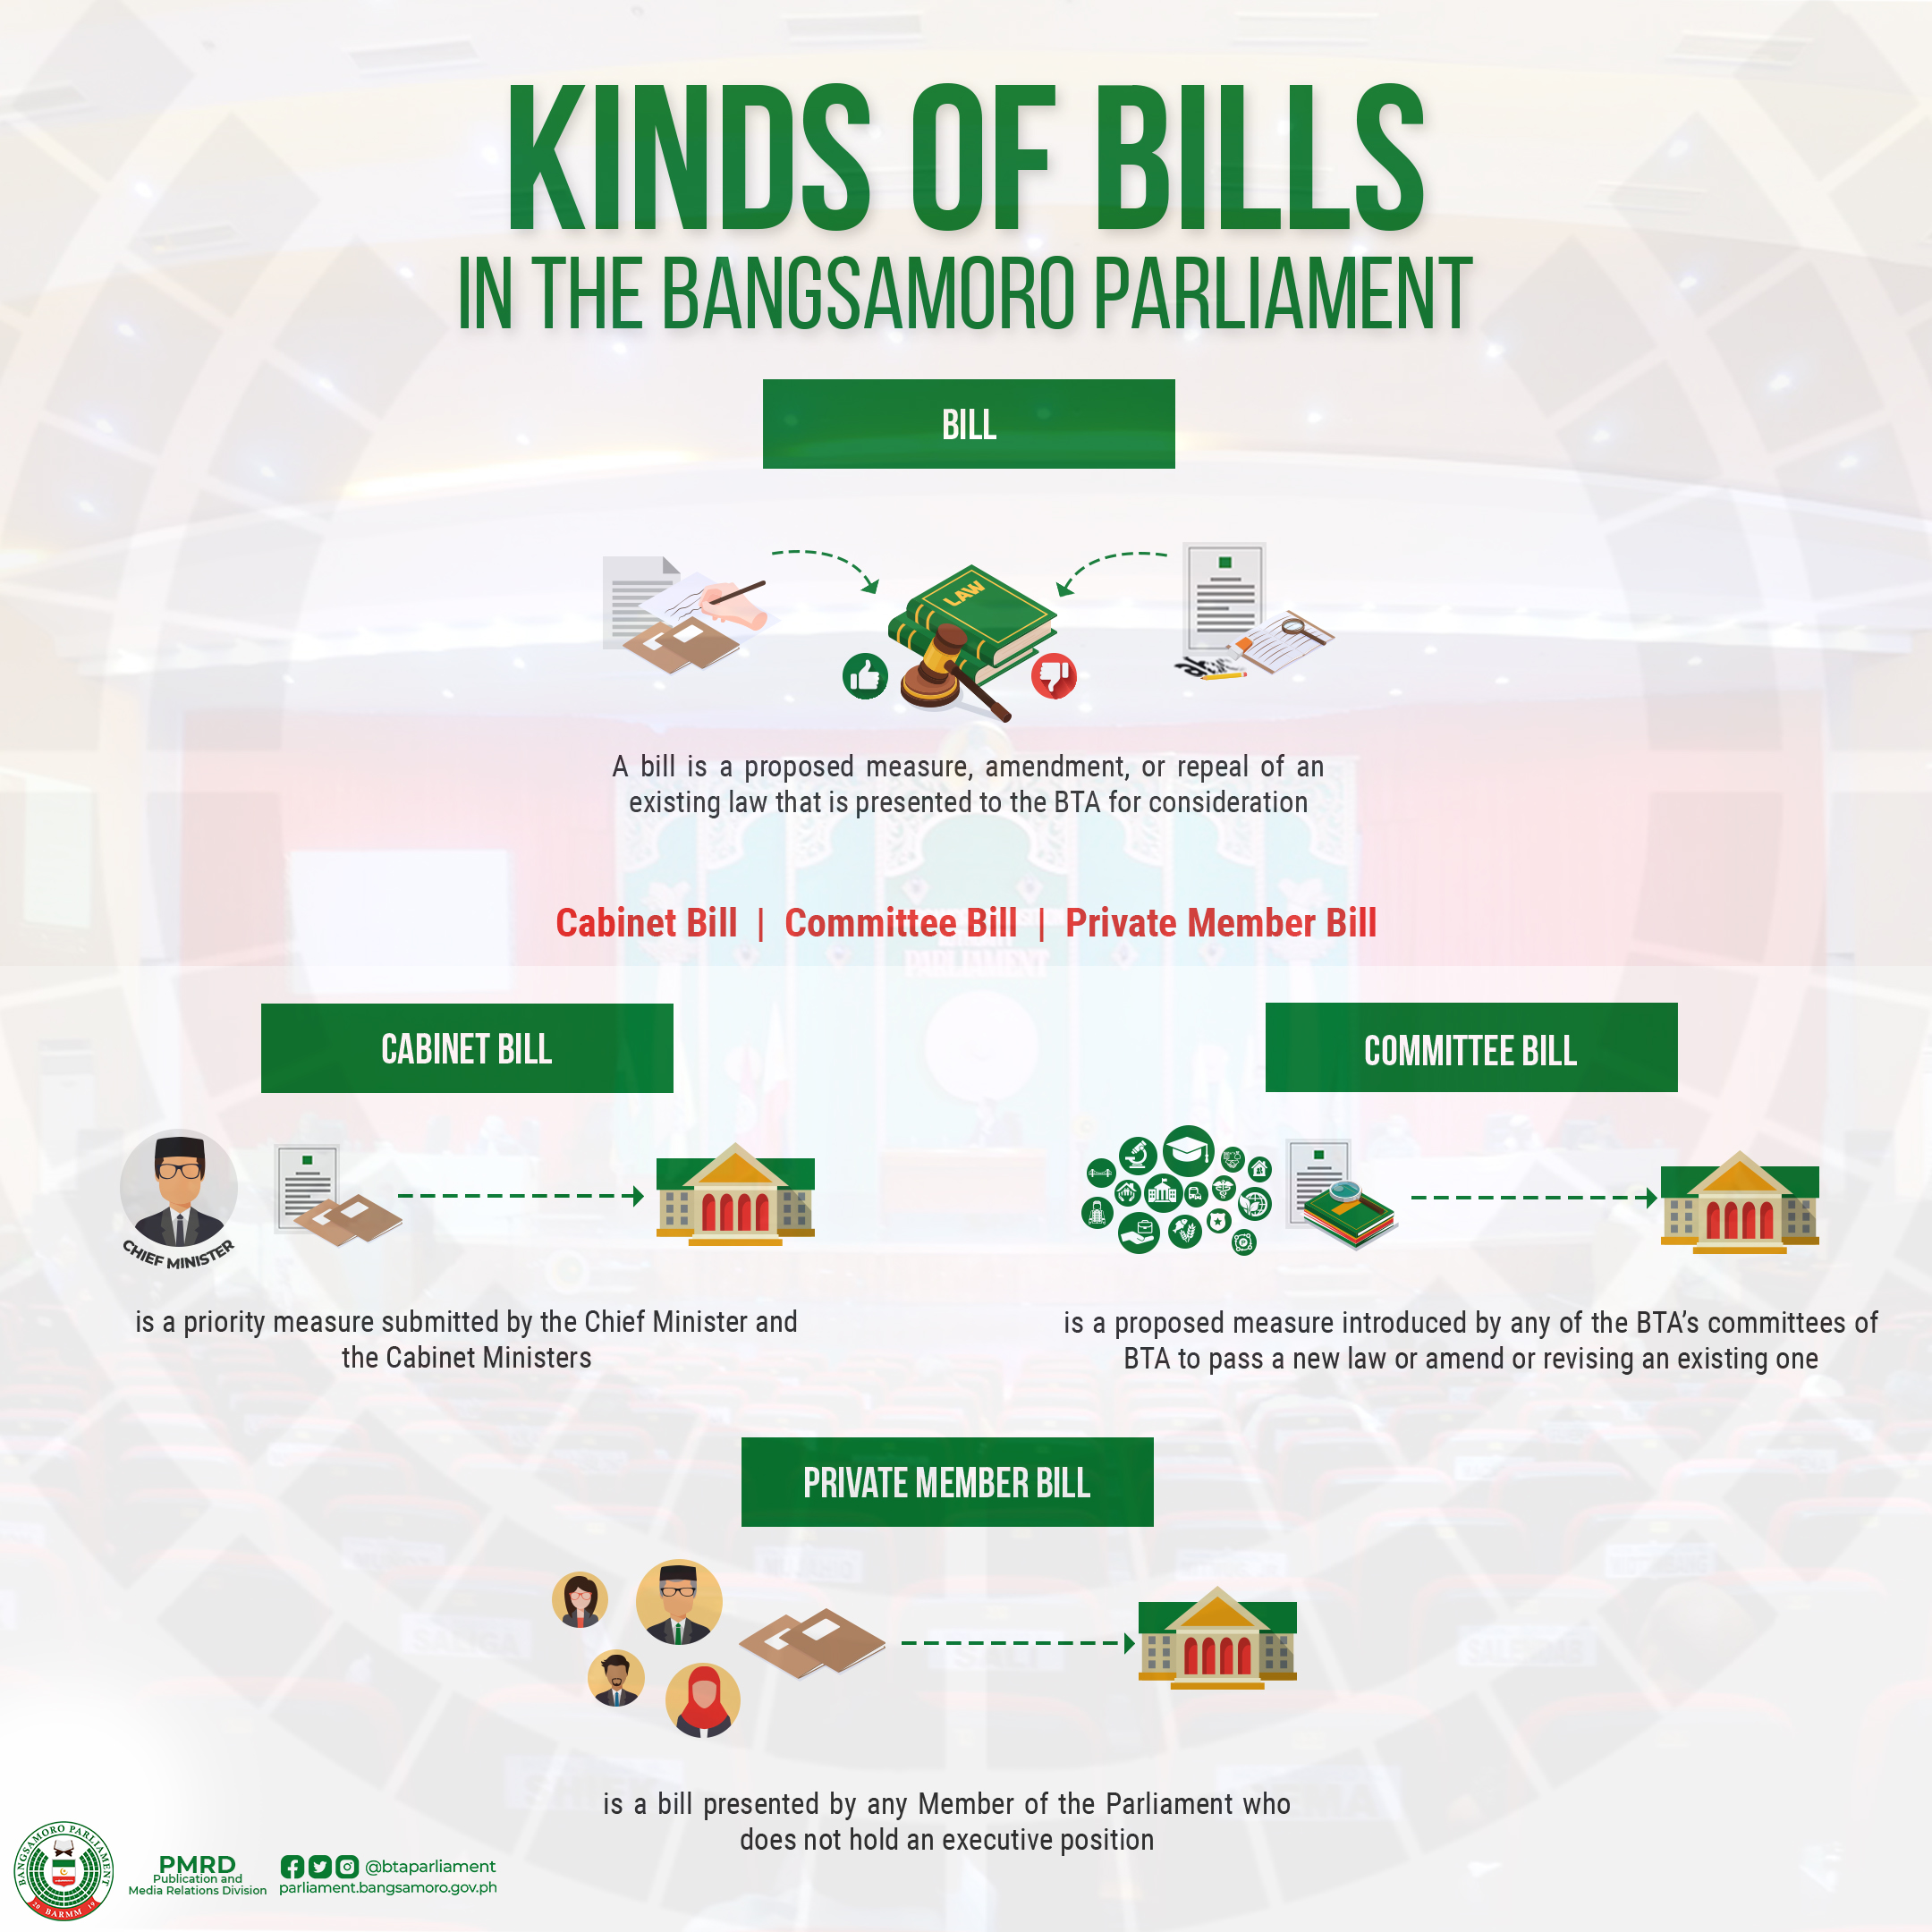 Kinds of Bills in the Bangsamoro Parliament